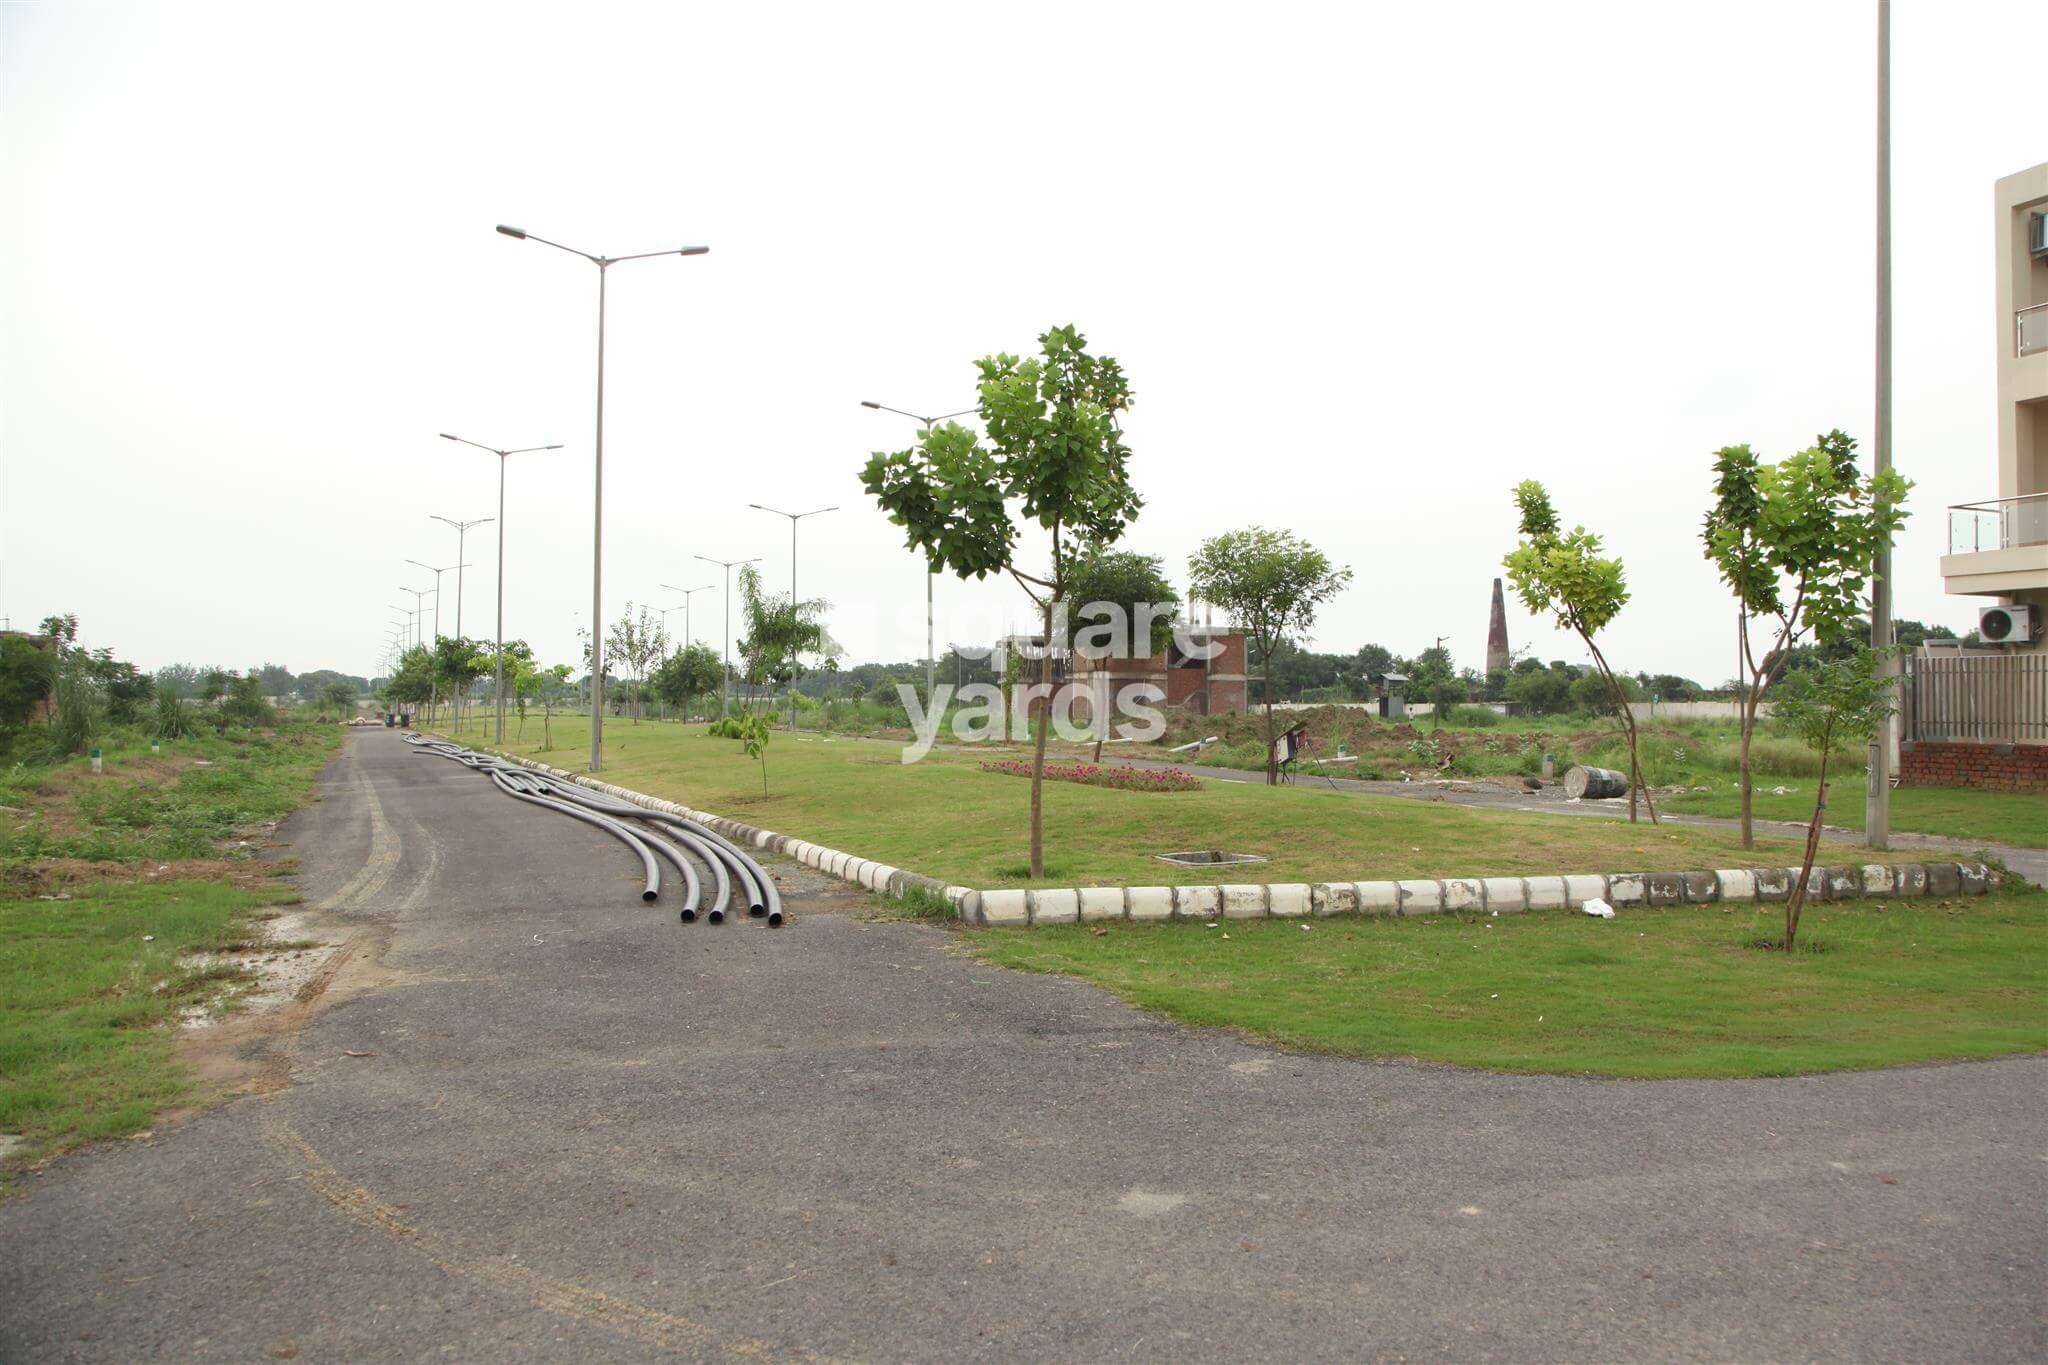 gaur yamuna city 32nd park view greens image3